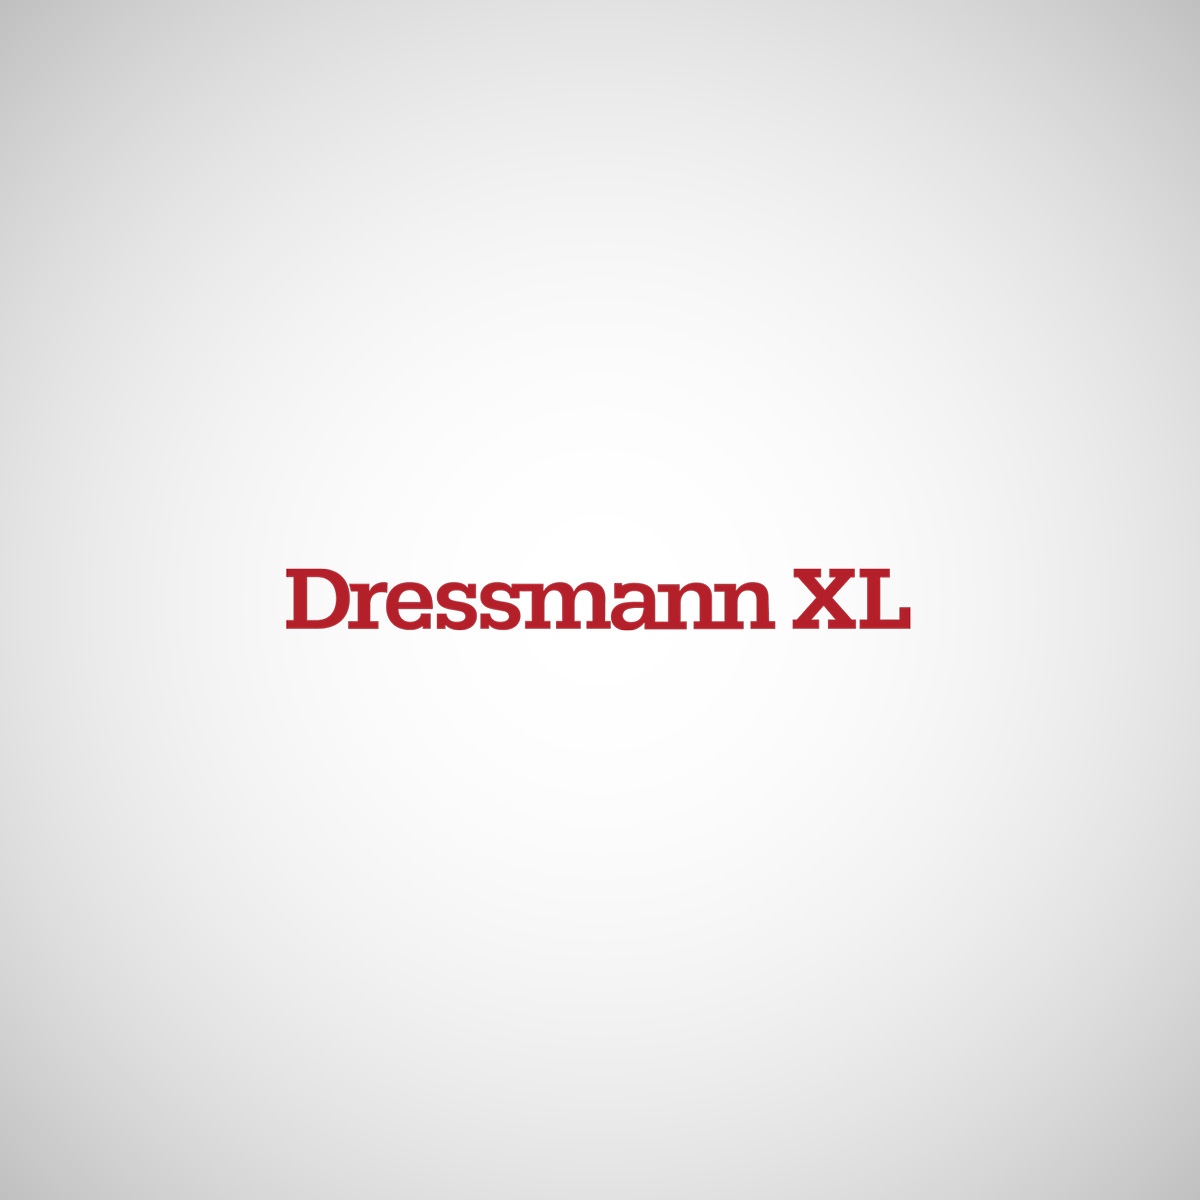 DressmannXL_1200x1200.jpg